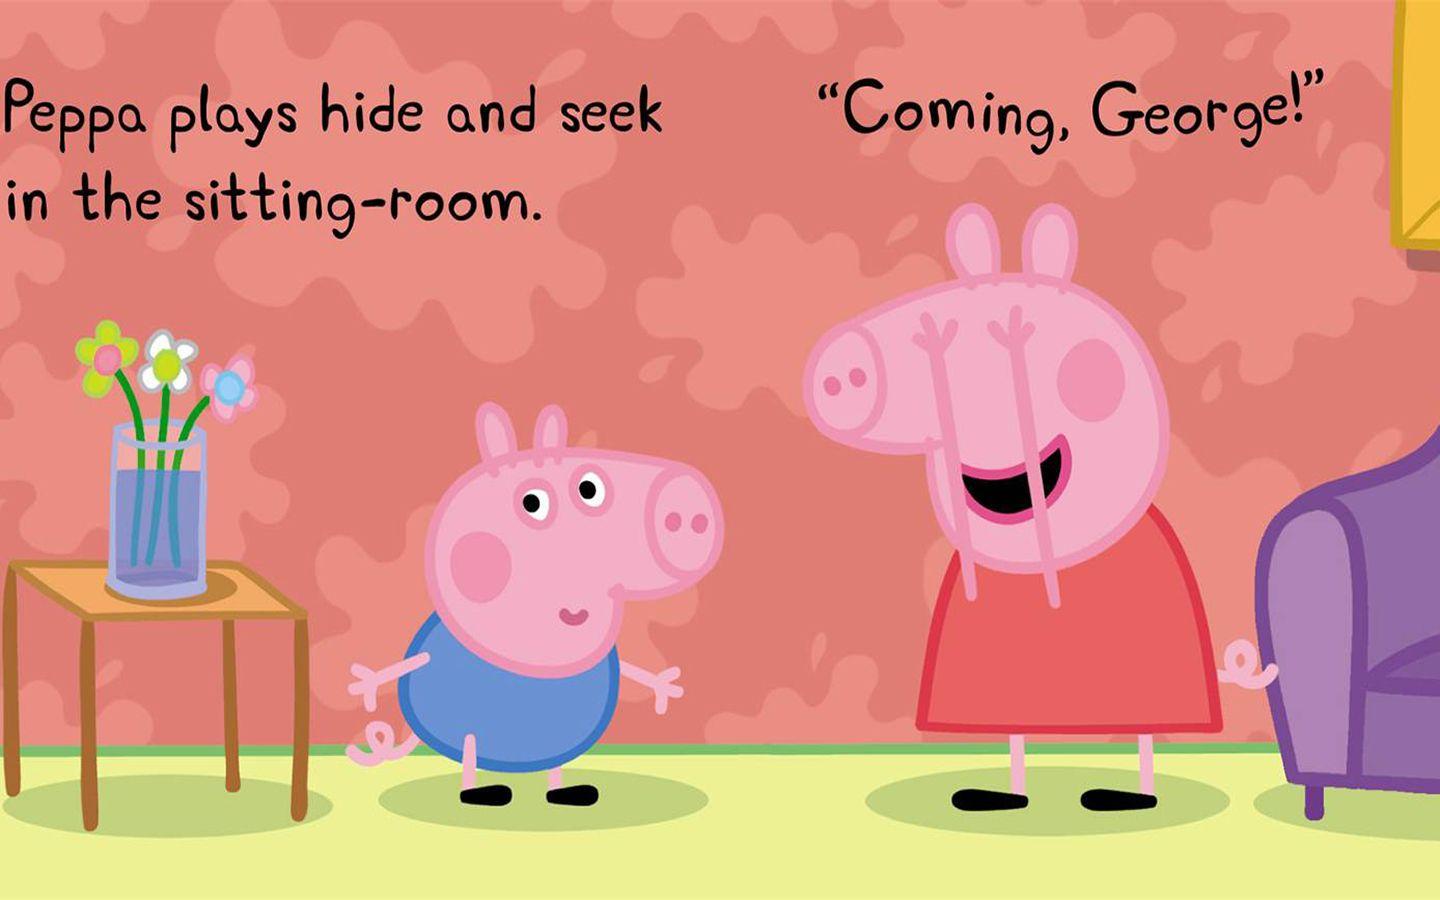 Peppa Pig Wallpaper Desktop